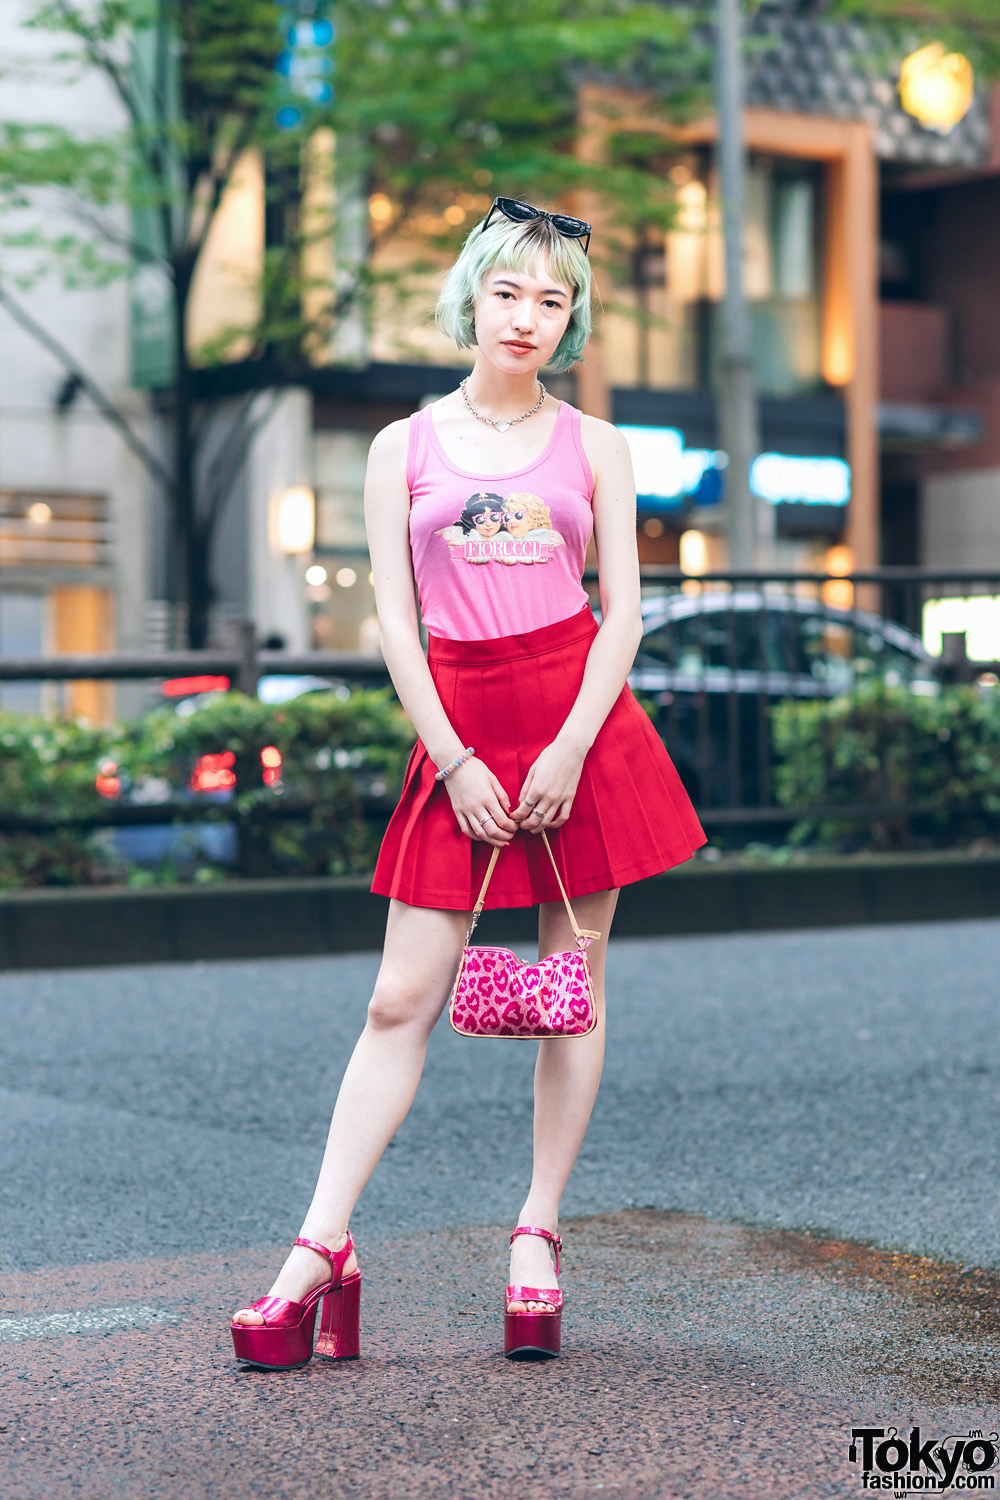 Japanese Model's Chic Street Look w/ Ombre Bob, Heart Necklace, Vintage Fiorucci Top, Pleated Skirt, Lip Print Handbag & Esperanza x Office Kiko Platform Sandals